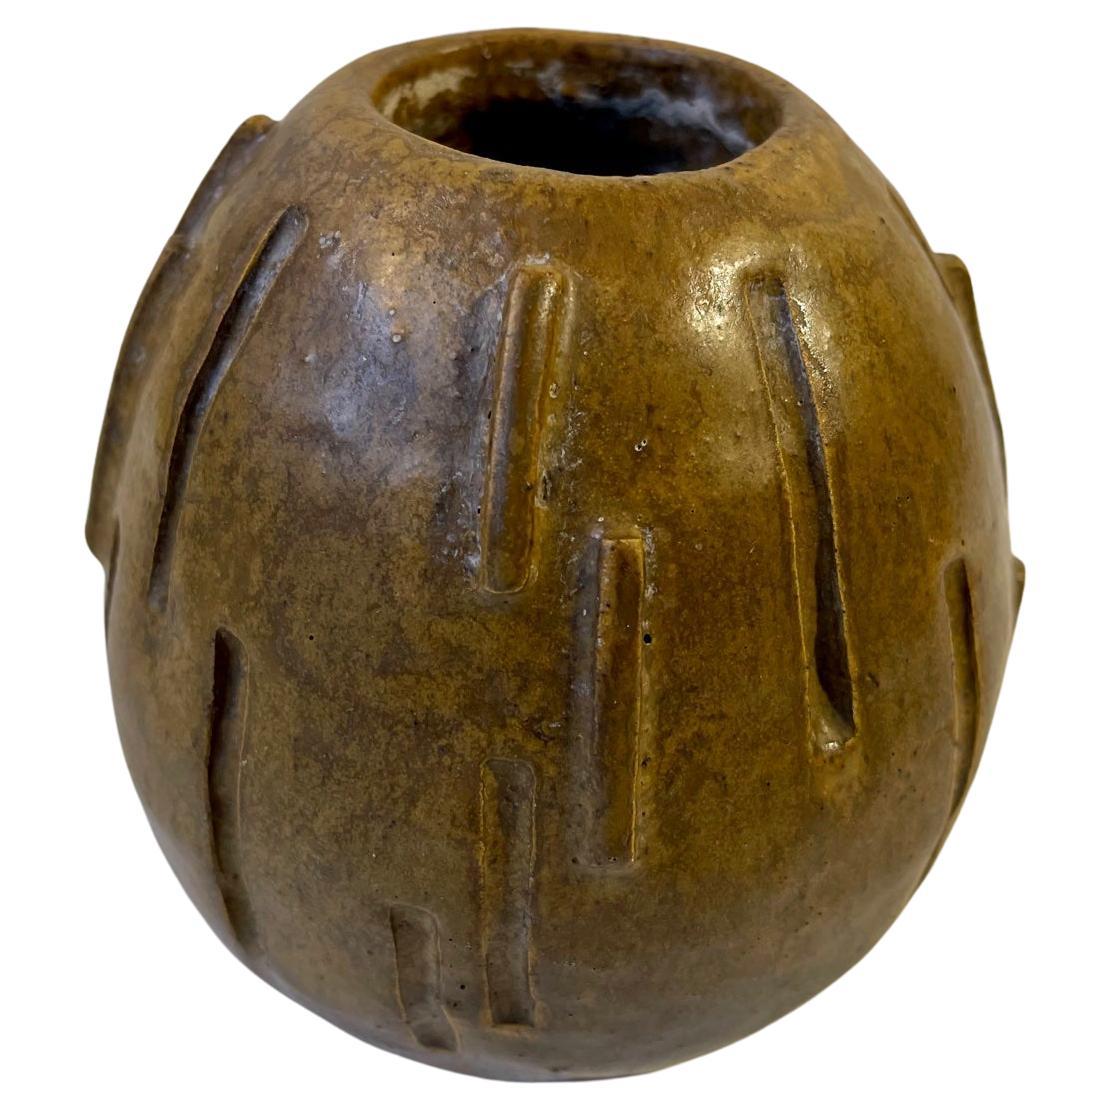 Scandinavian Brutalist Vase in Glazed Stoneware, Signed, 1970